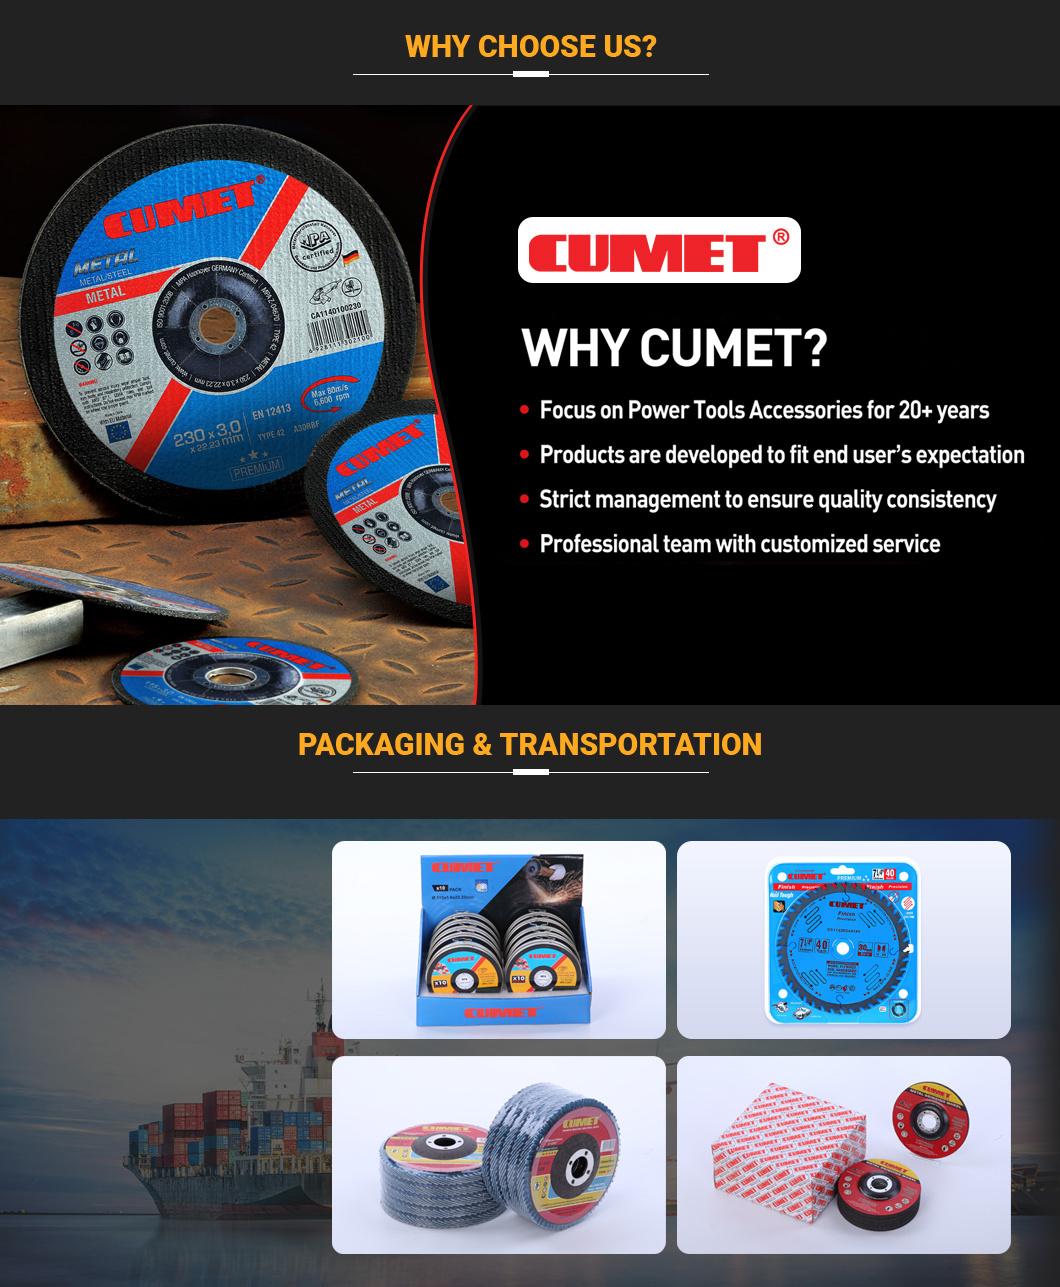 Dewalt Black & Decker Cumet T41A-125X1.0X22.2mm Aluminum Oxide Cutting Wheel